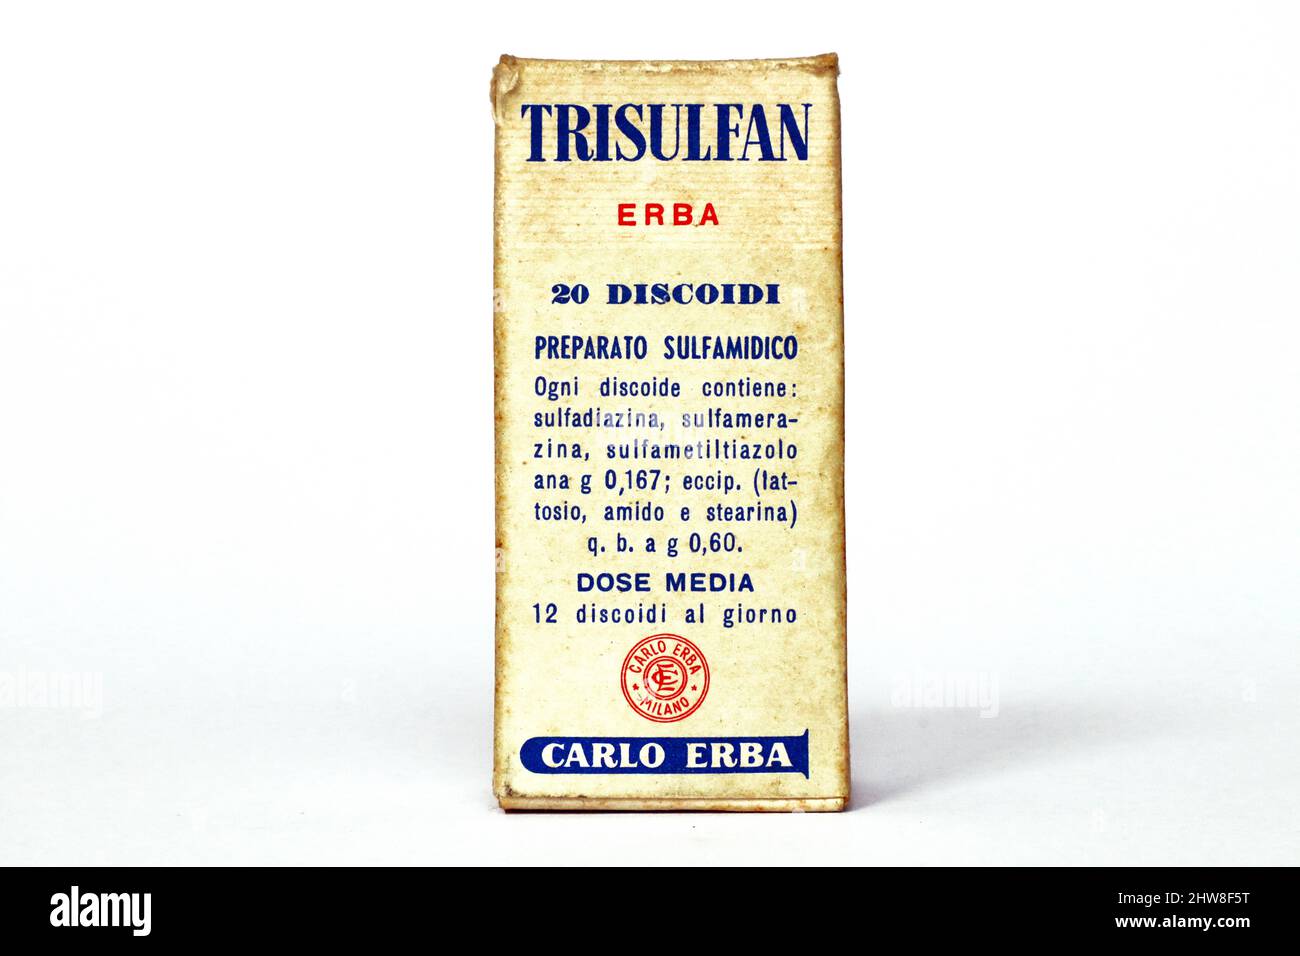 Vintage 1950s TRISULFAN ERBA, Sulfonamide medicine for the treatment of streptococcus pneumoniae, meningococcus infections. CARLO ERBA – Milan (Italy) Stock Photo